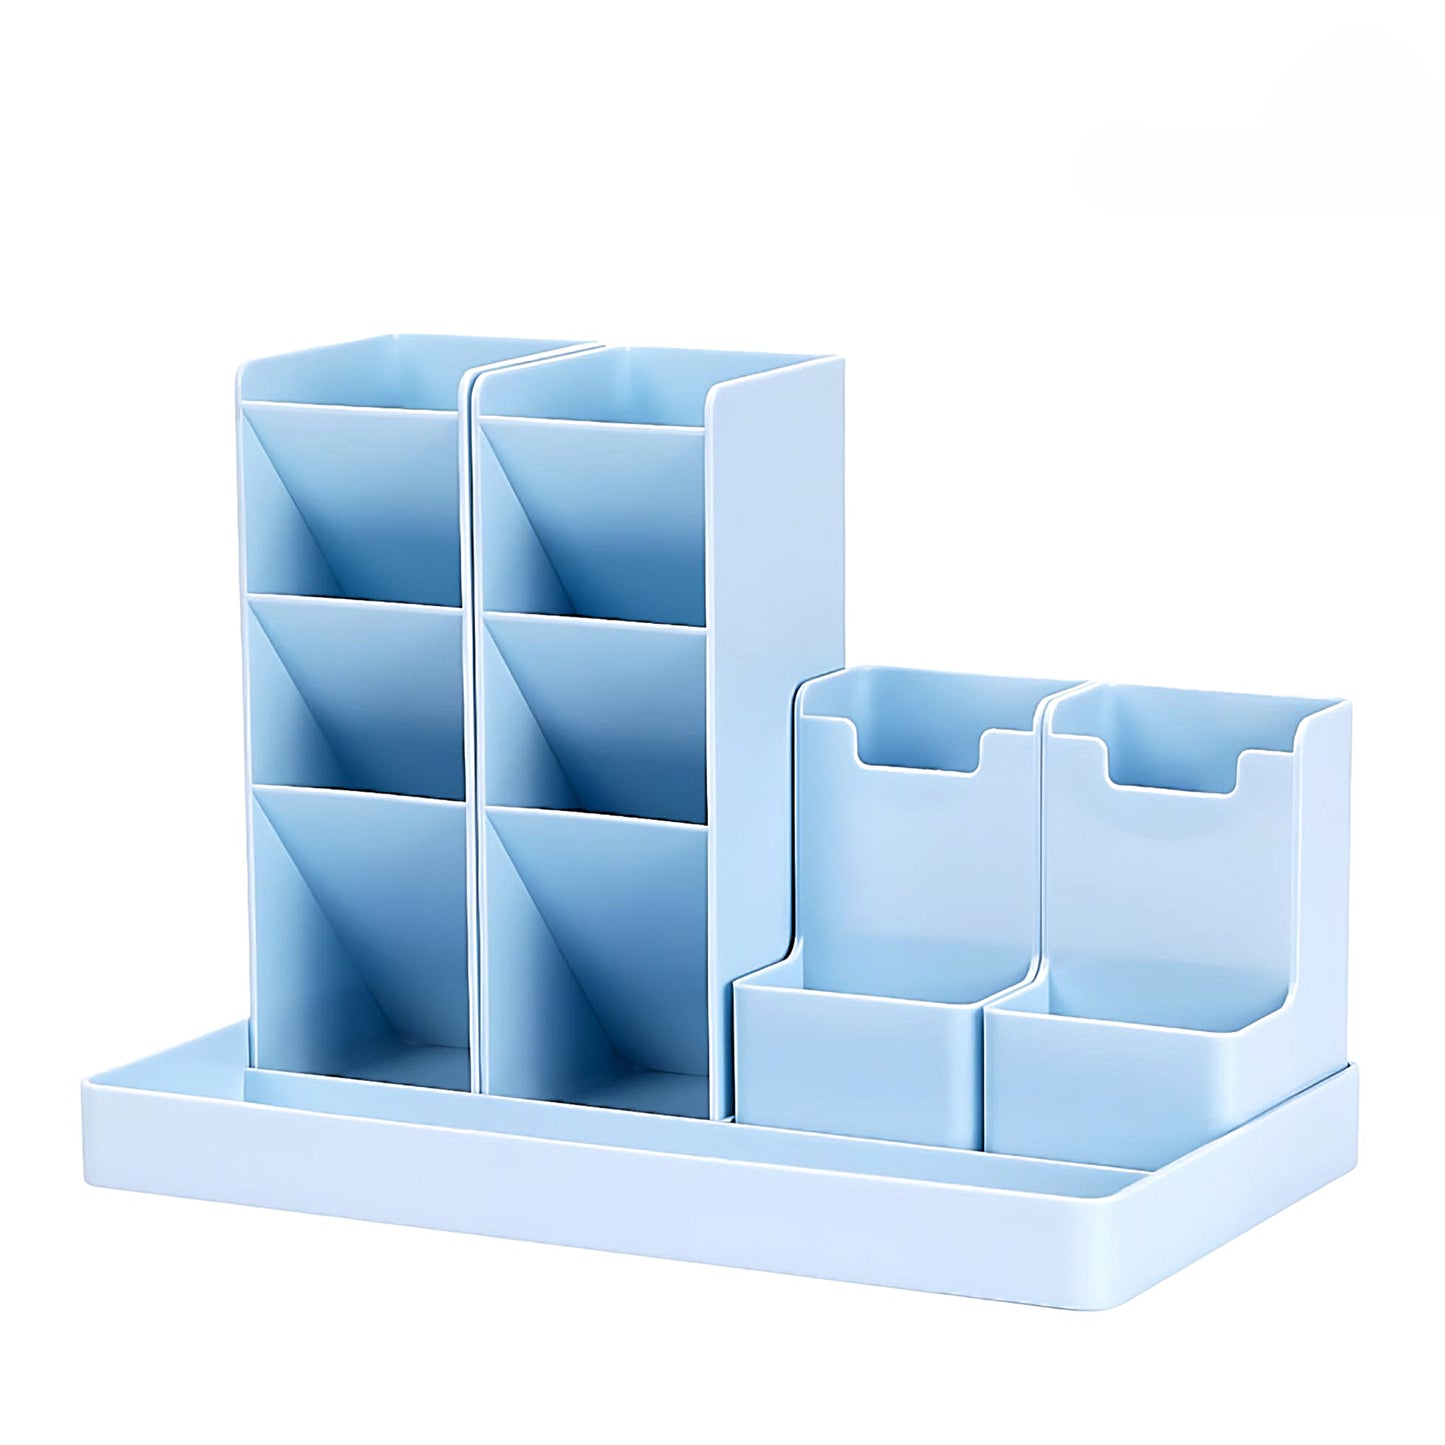 a blue modular desktop organizer on a white background